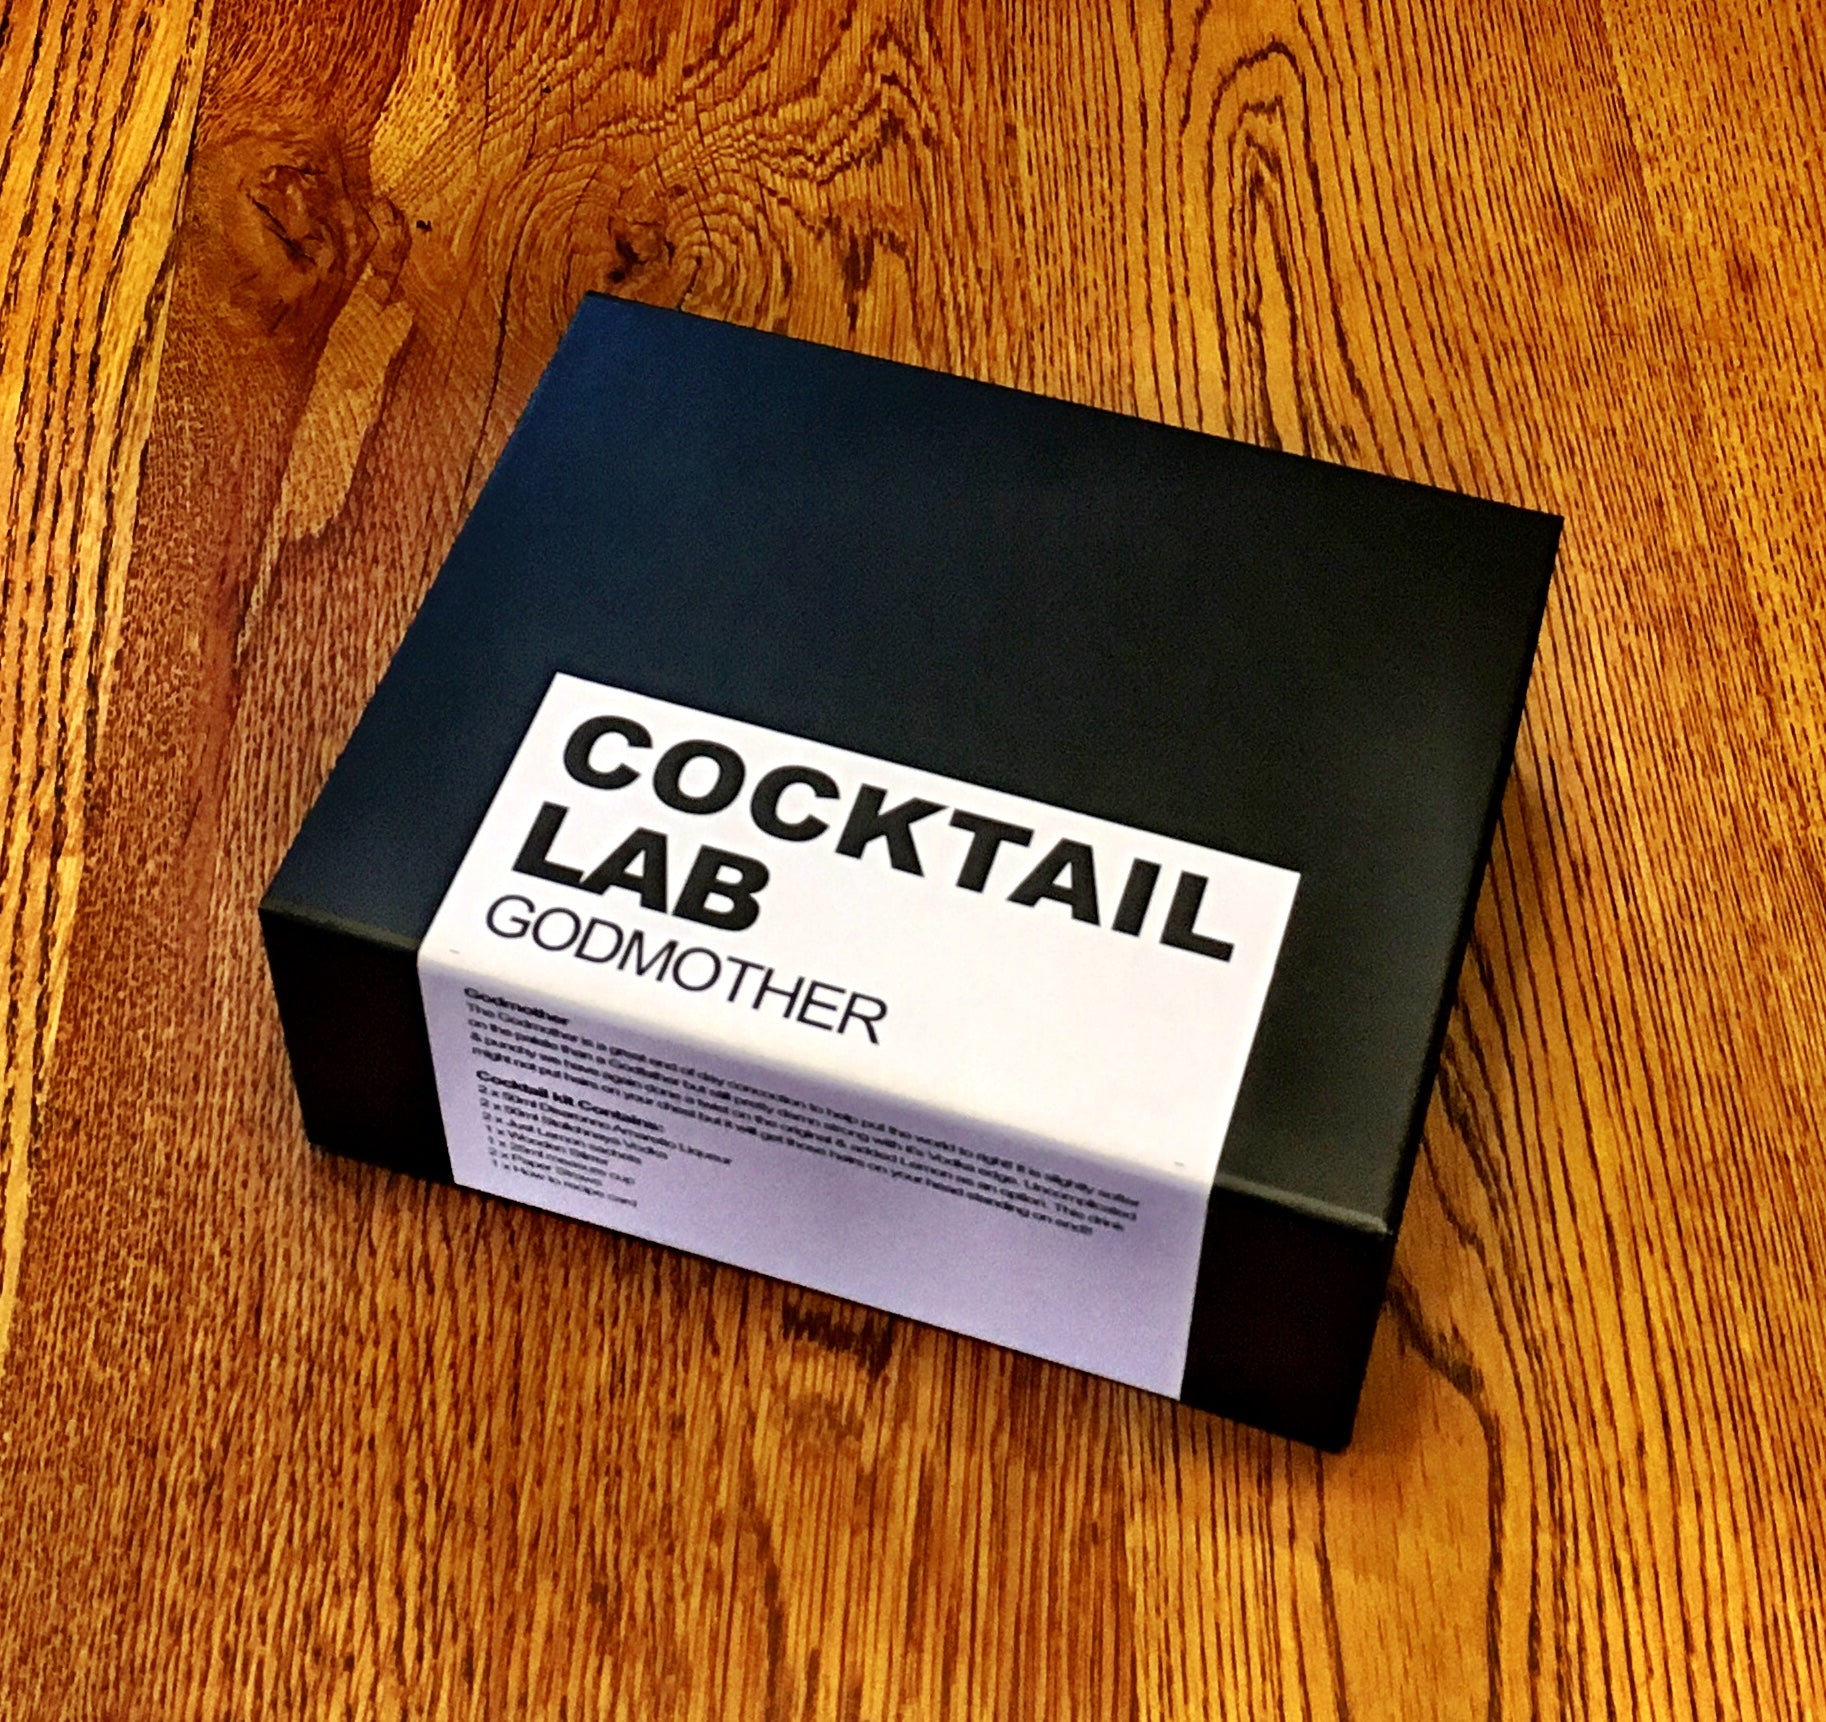 Godmother Cocktail Gift Kit